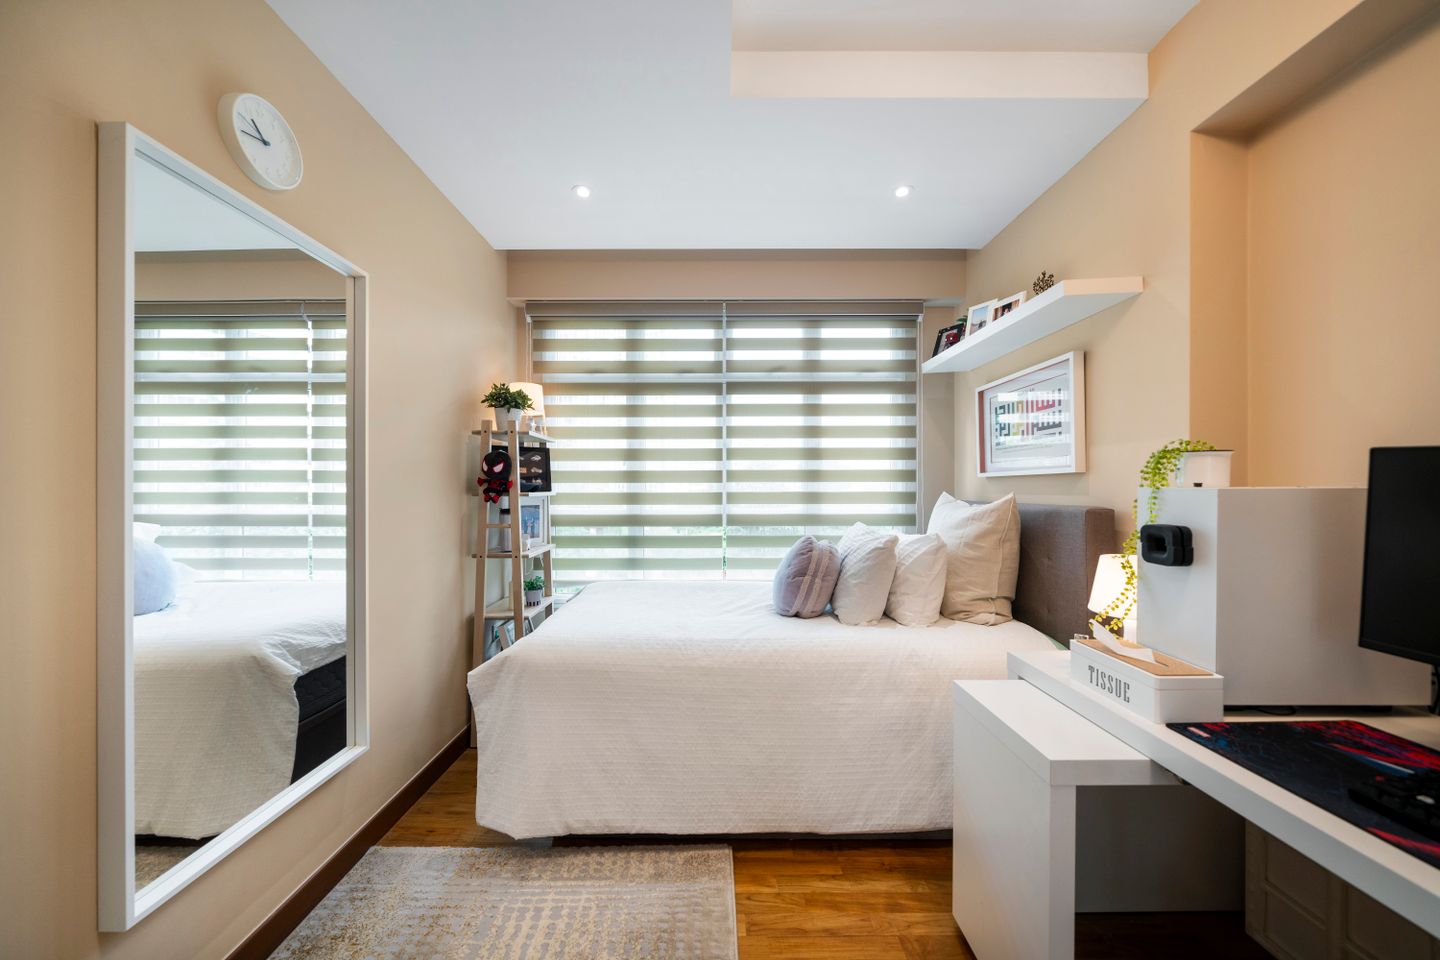 Spacious Bedroom With Contemporary Interior - Livspace